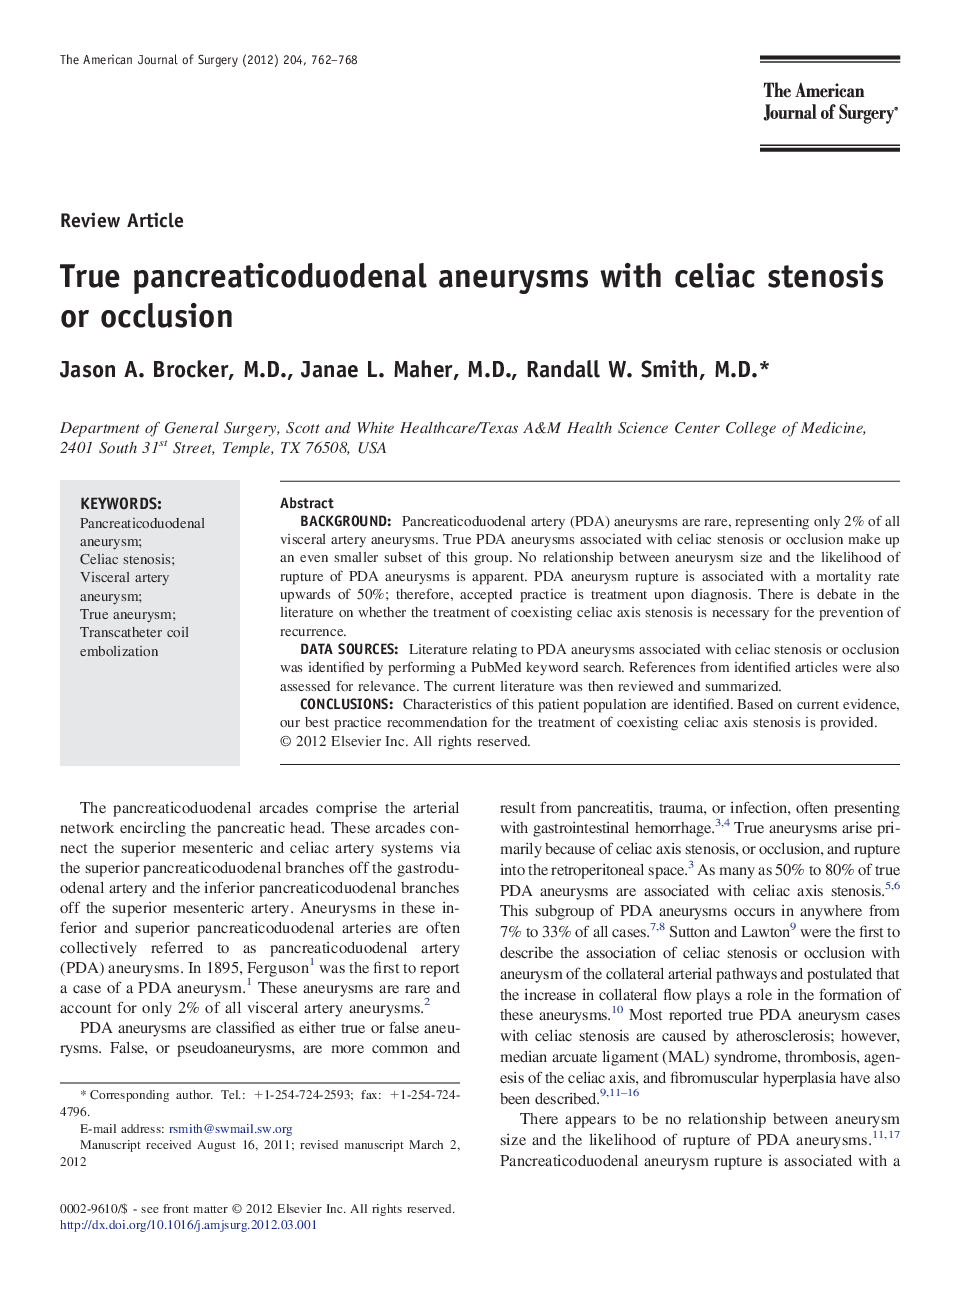 True pancreaticoduodenal aneurysms with celiac stenosis or occlusion